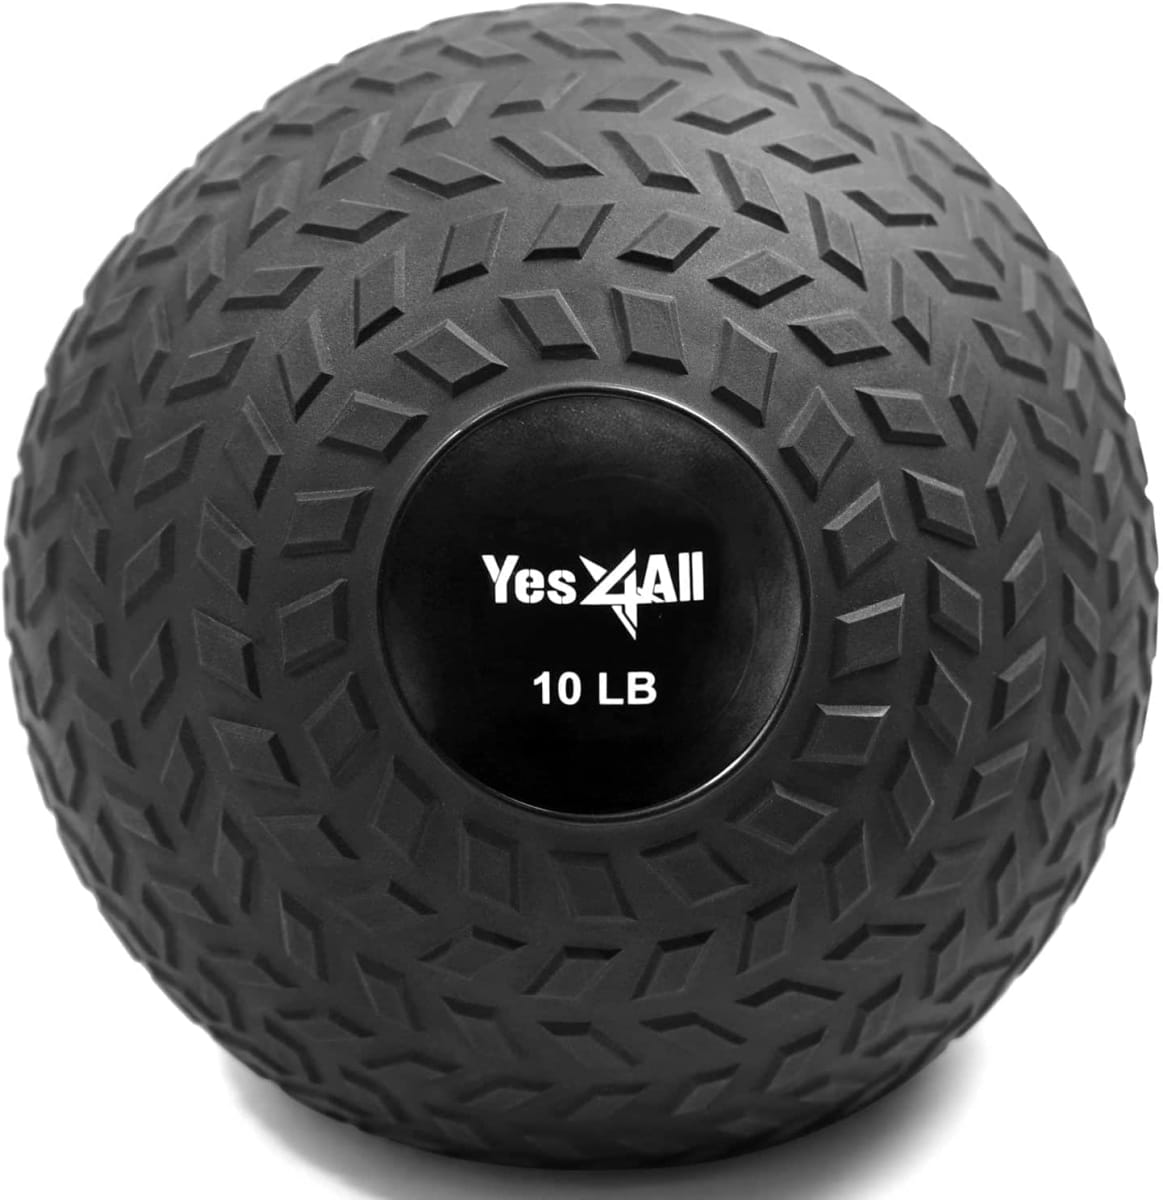 Slam Balls (Tread Black, Blue, Teal, Orange & Glossy) 10-40lbs for Strength, Power and Crossfit Workout – Slam Medicine Ball